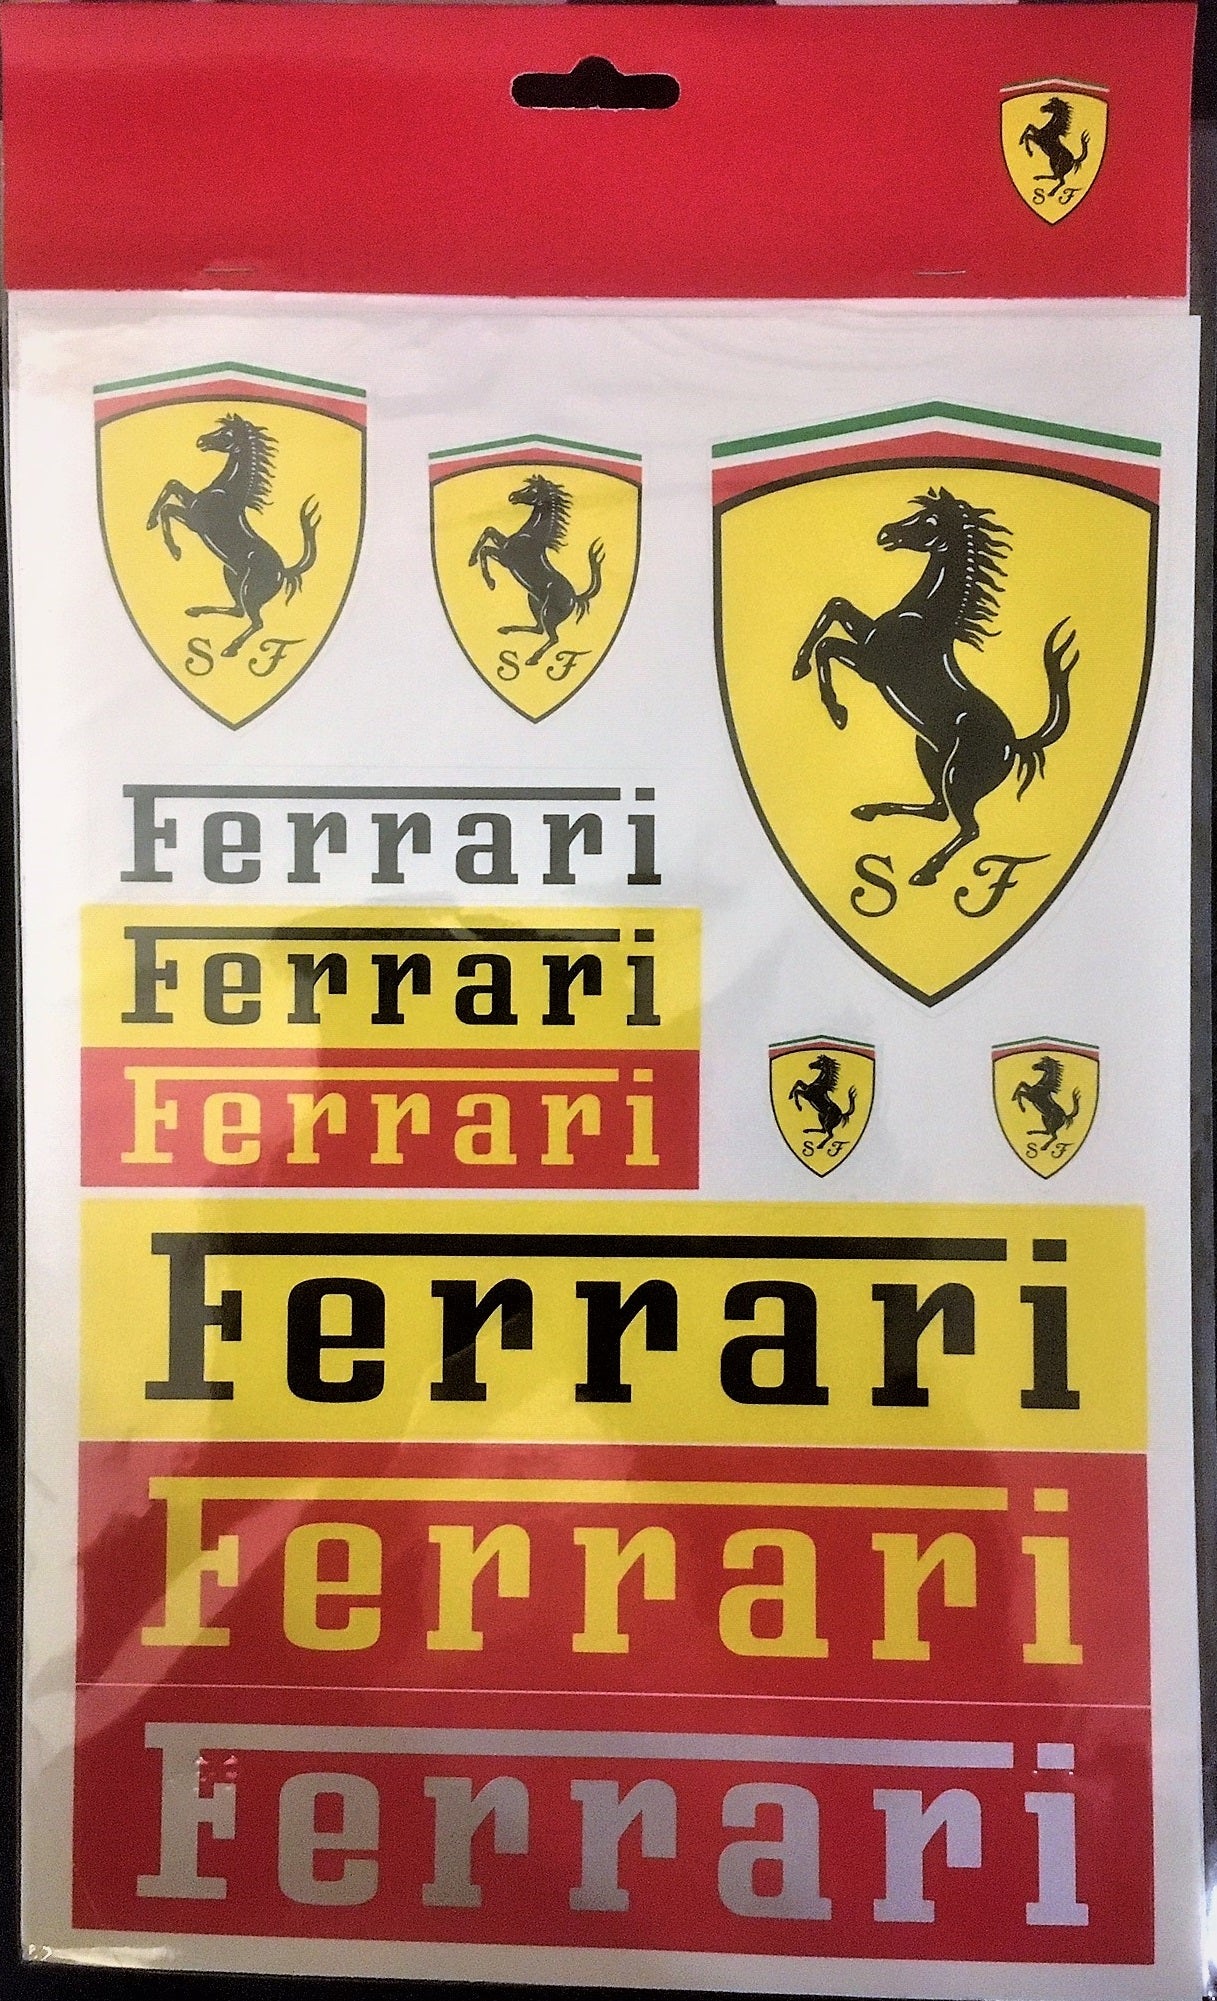 Autocollant Ferrari Teams